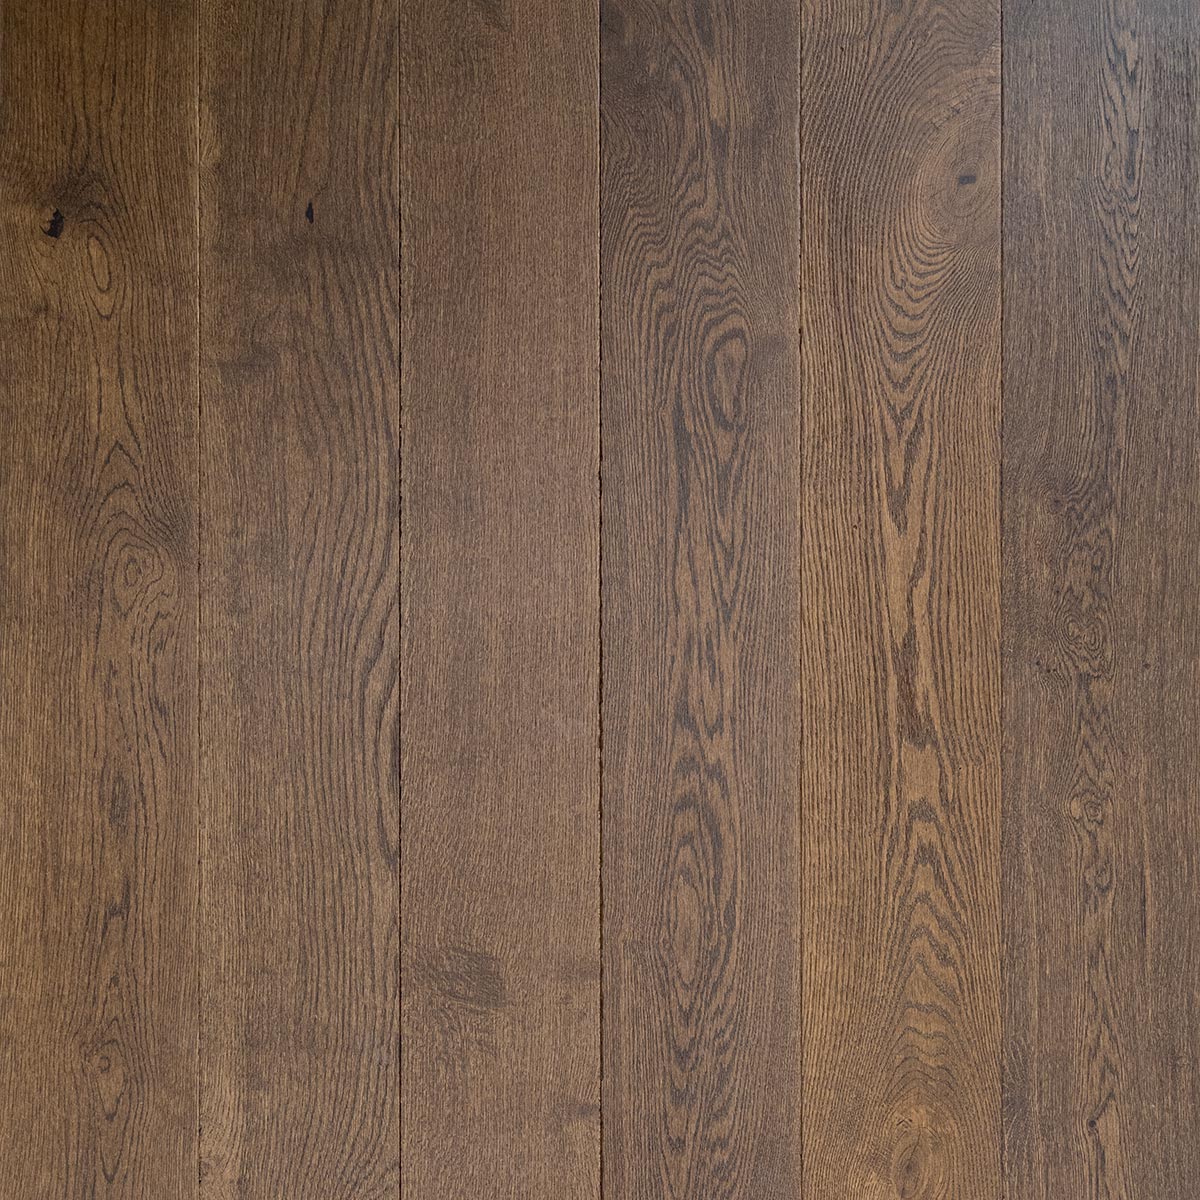 Multiply oak wood flooring named Deco Plank Tannery Brown